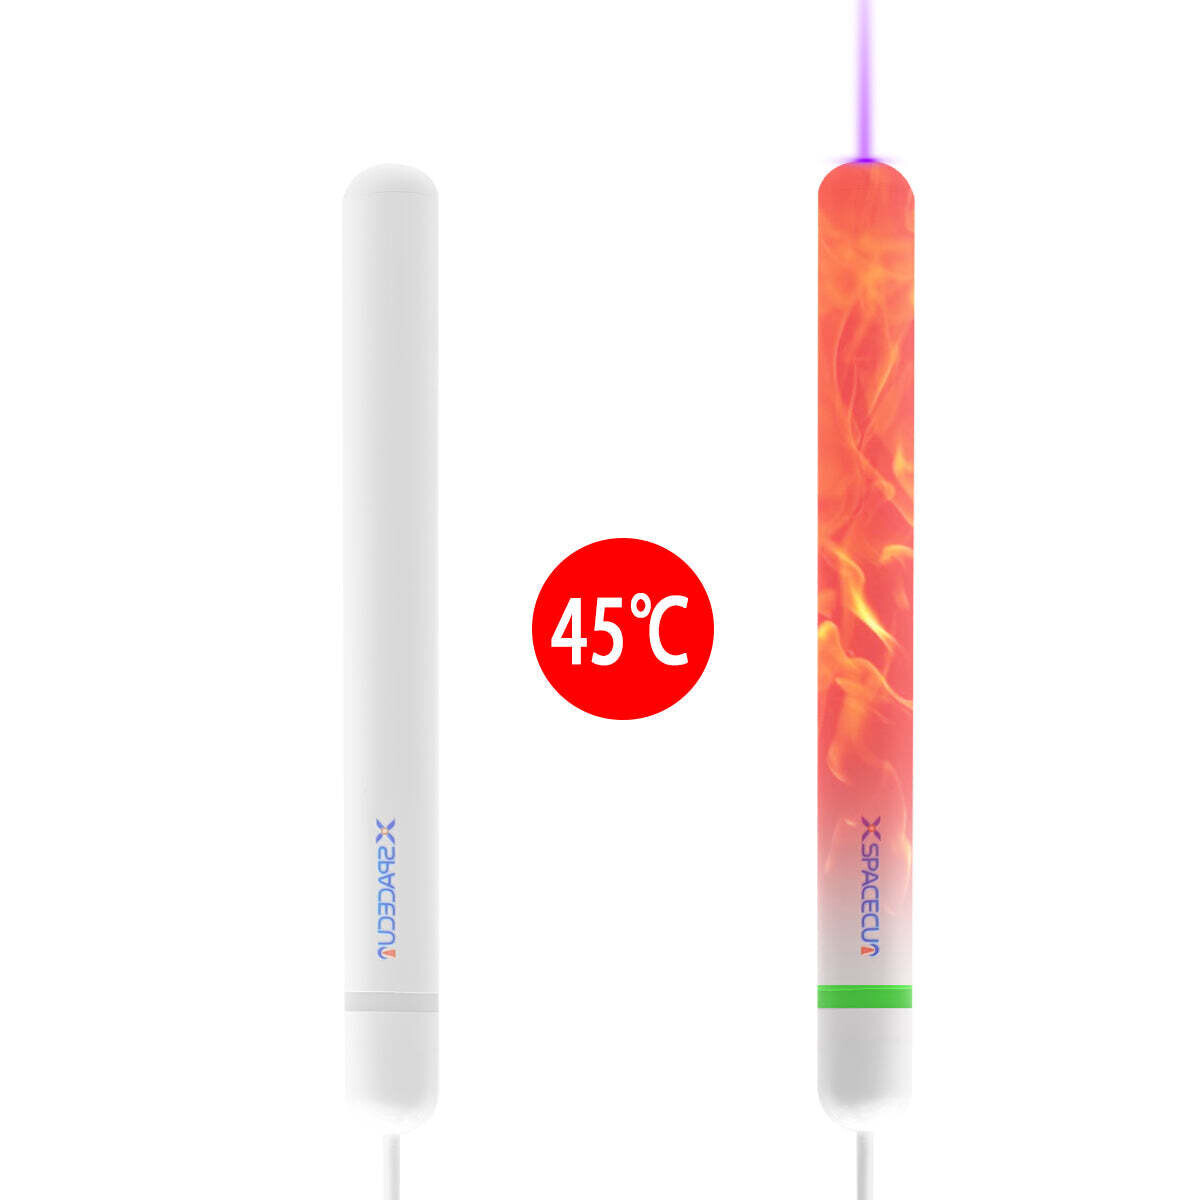 X Usb Heating 45℃ Rod With Uv